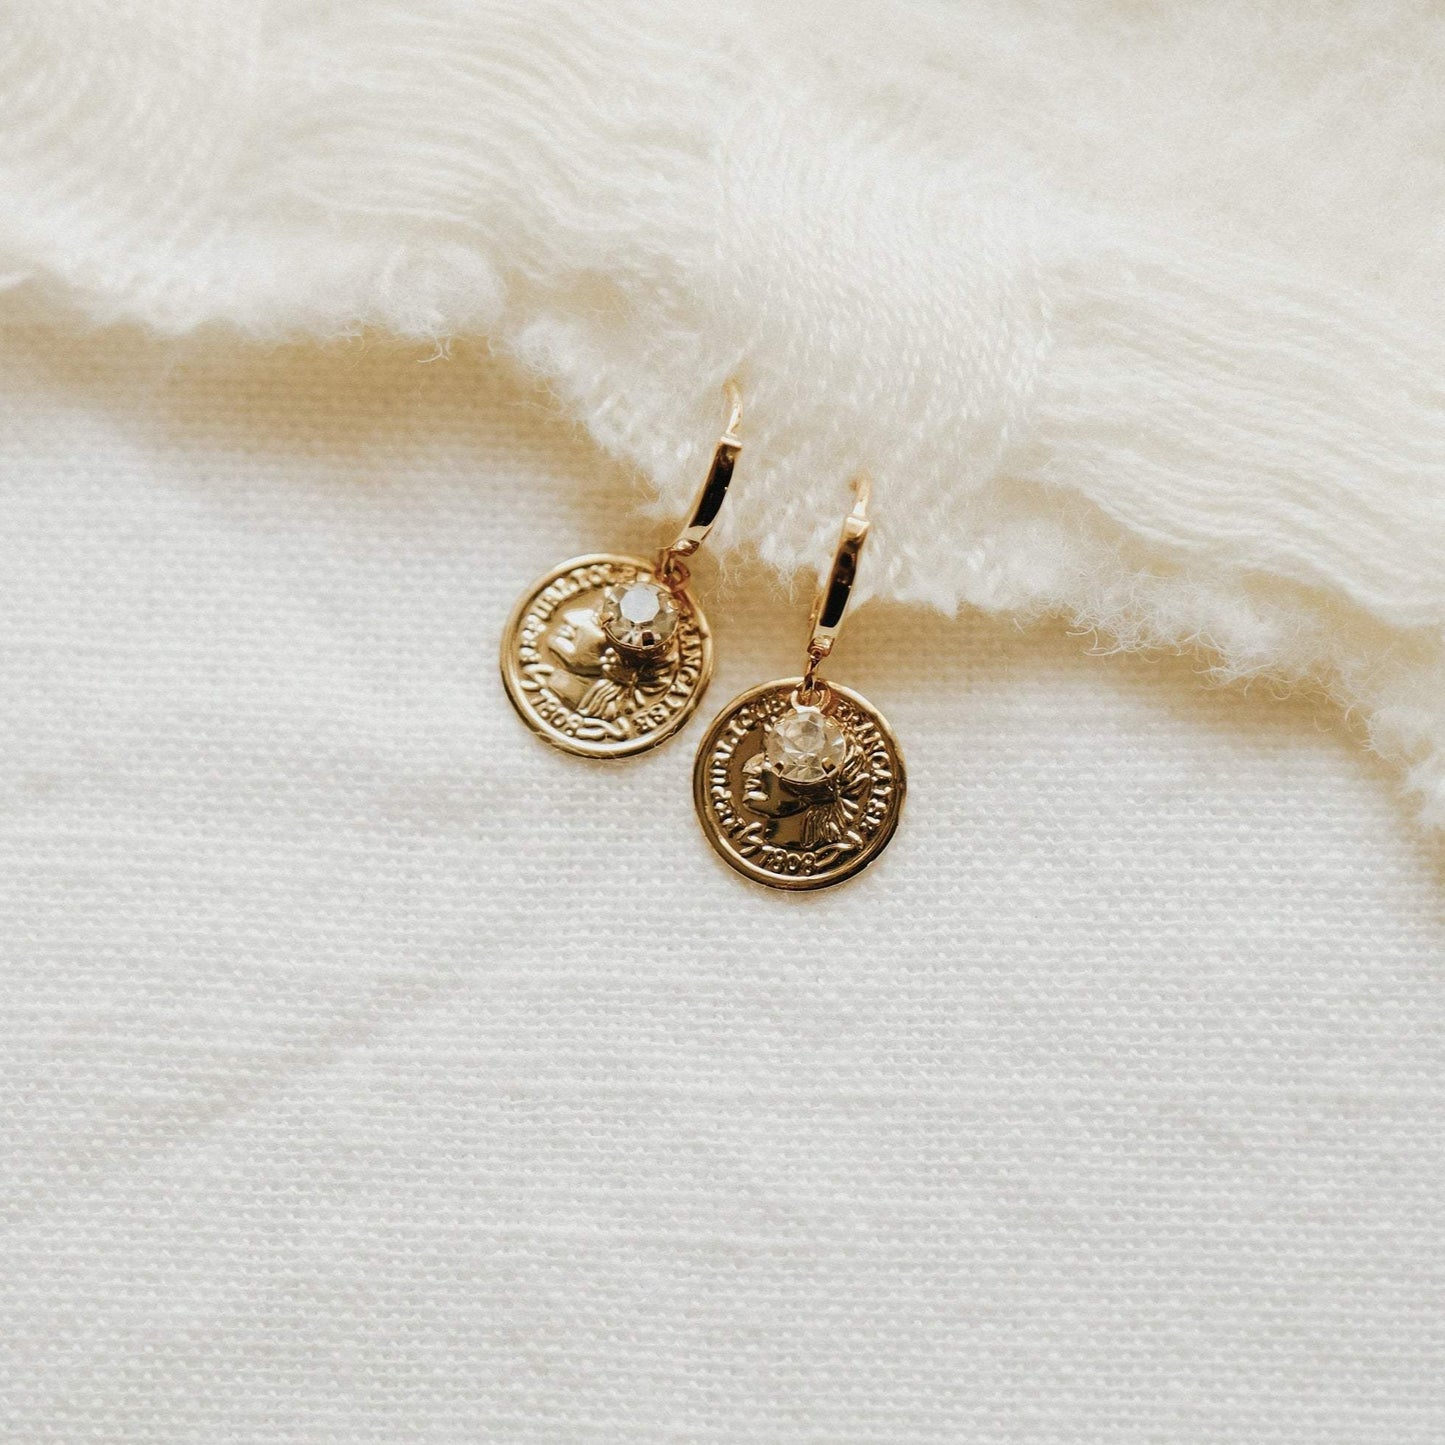 “Elyna” earrings